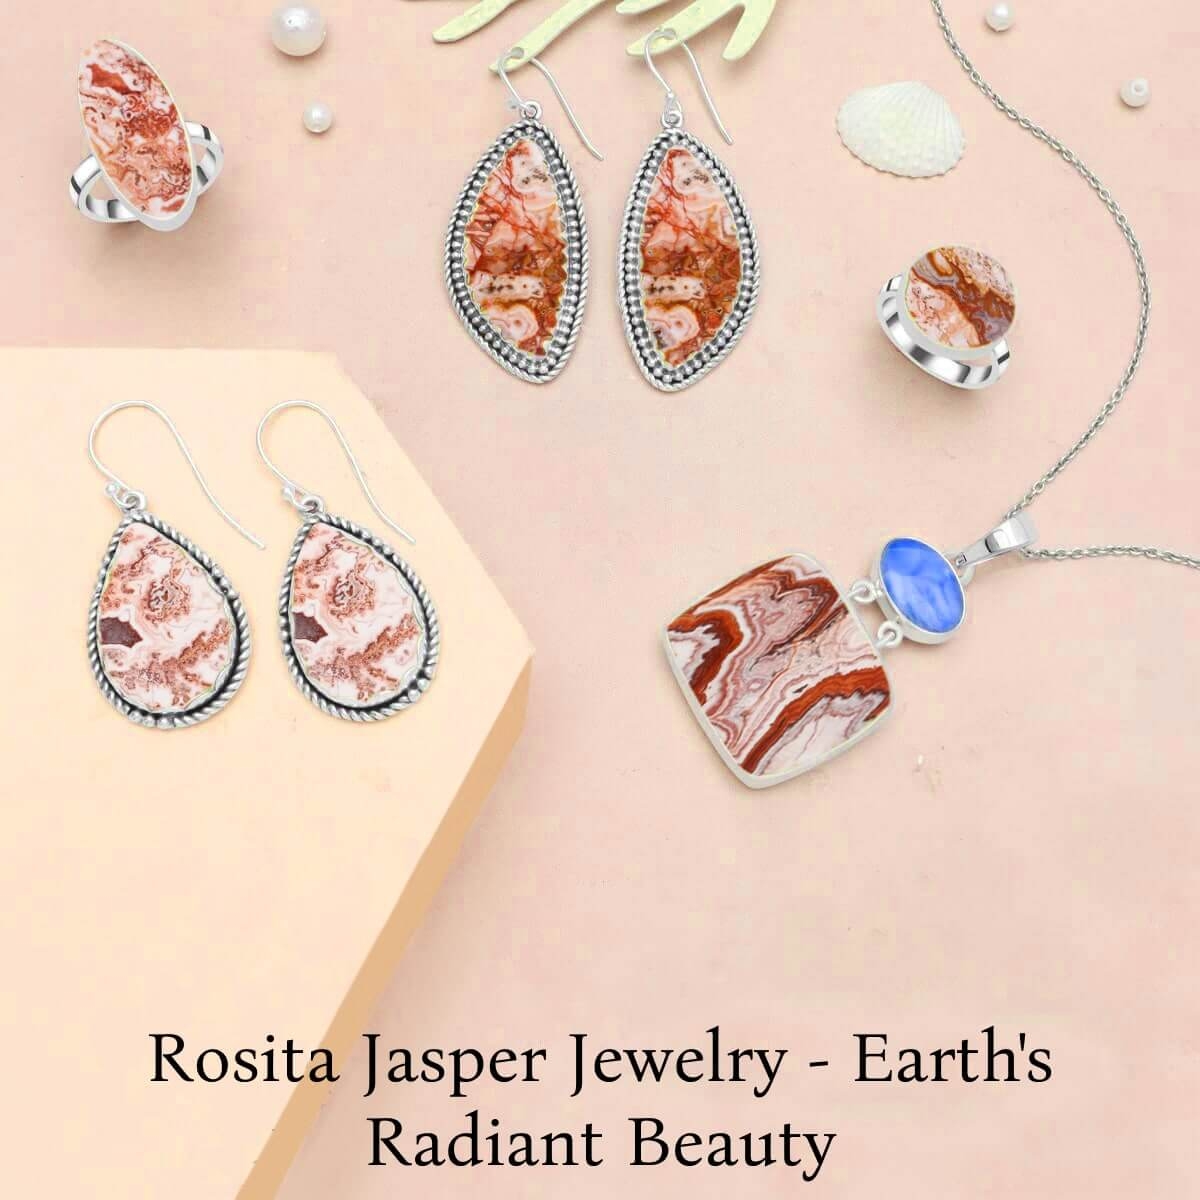 Rosita Jasper Jewelry